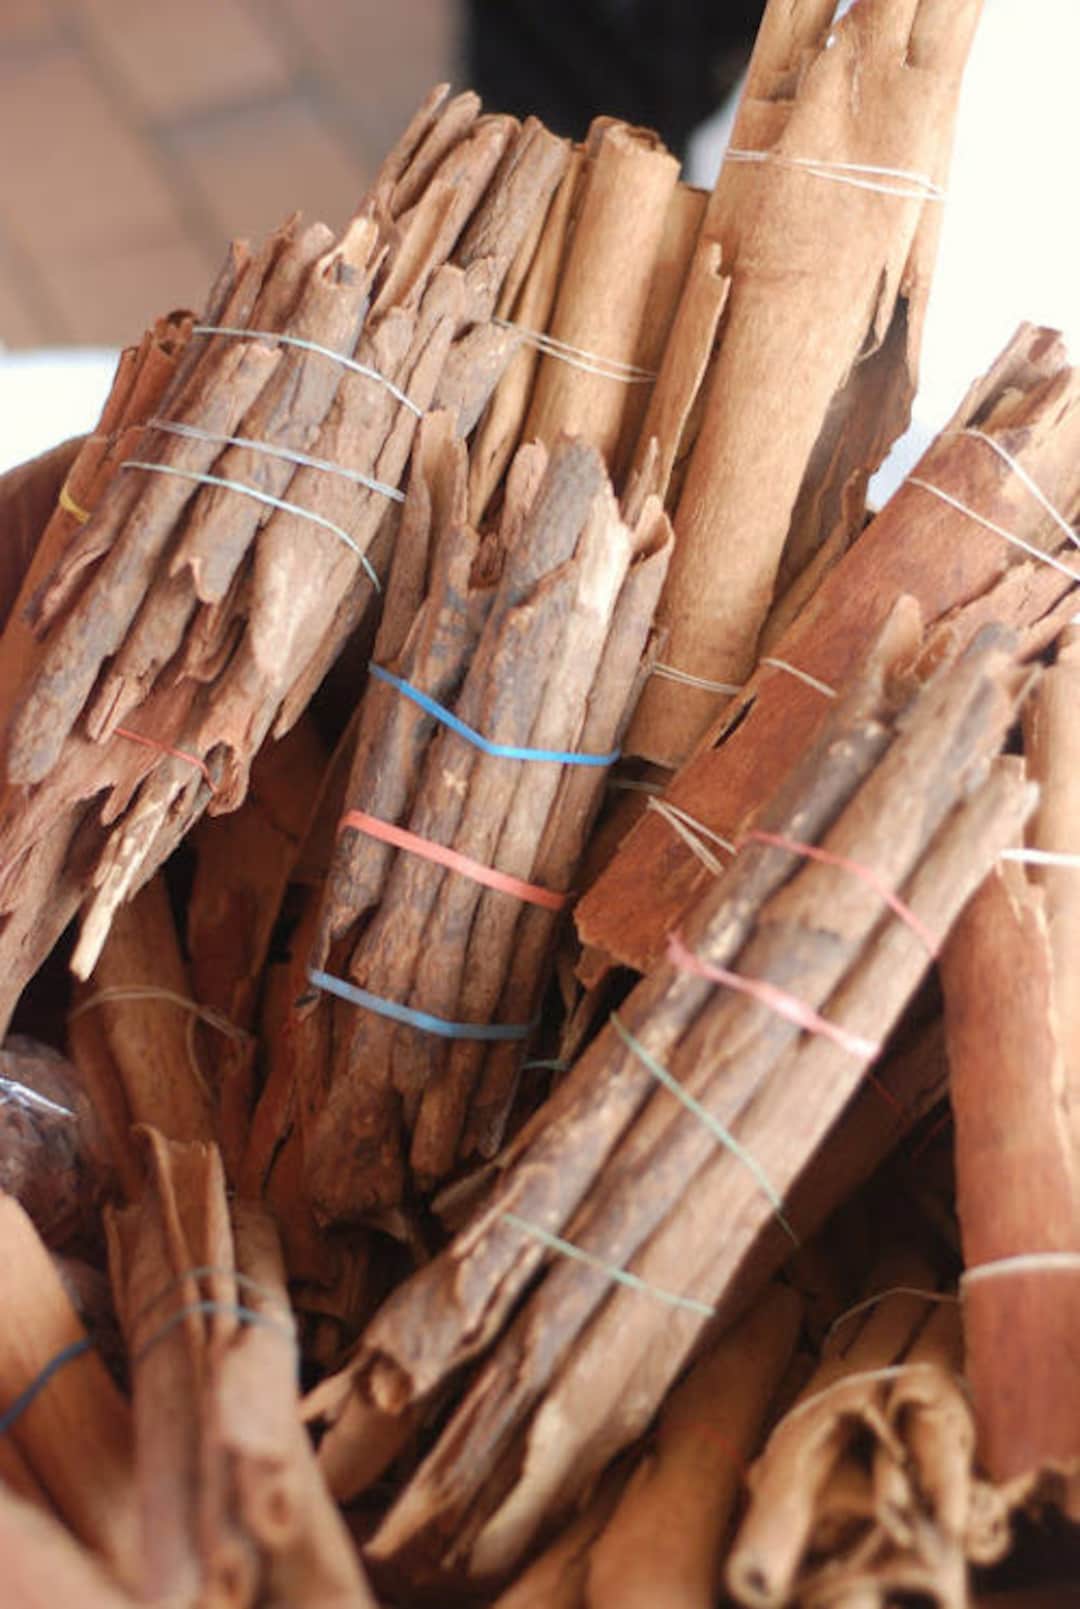 Bois Bandé 100g Dried Bark From Madagascar for Arranged Rum or